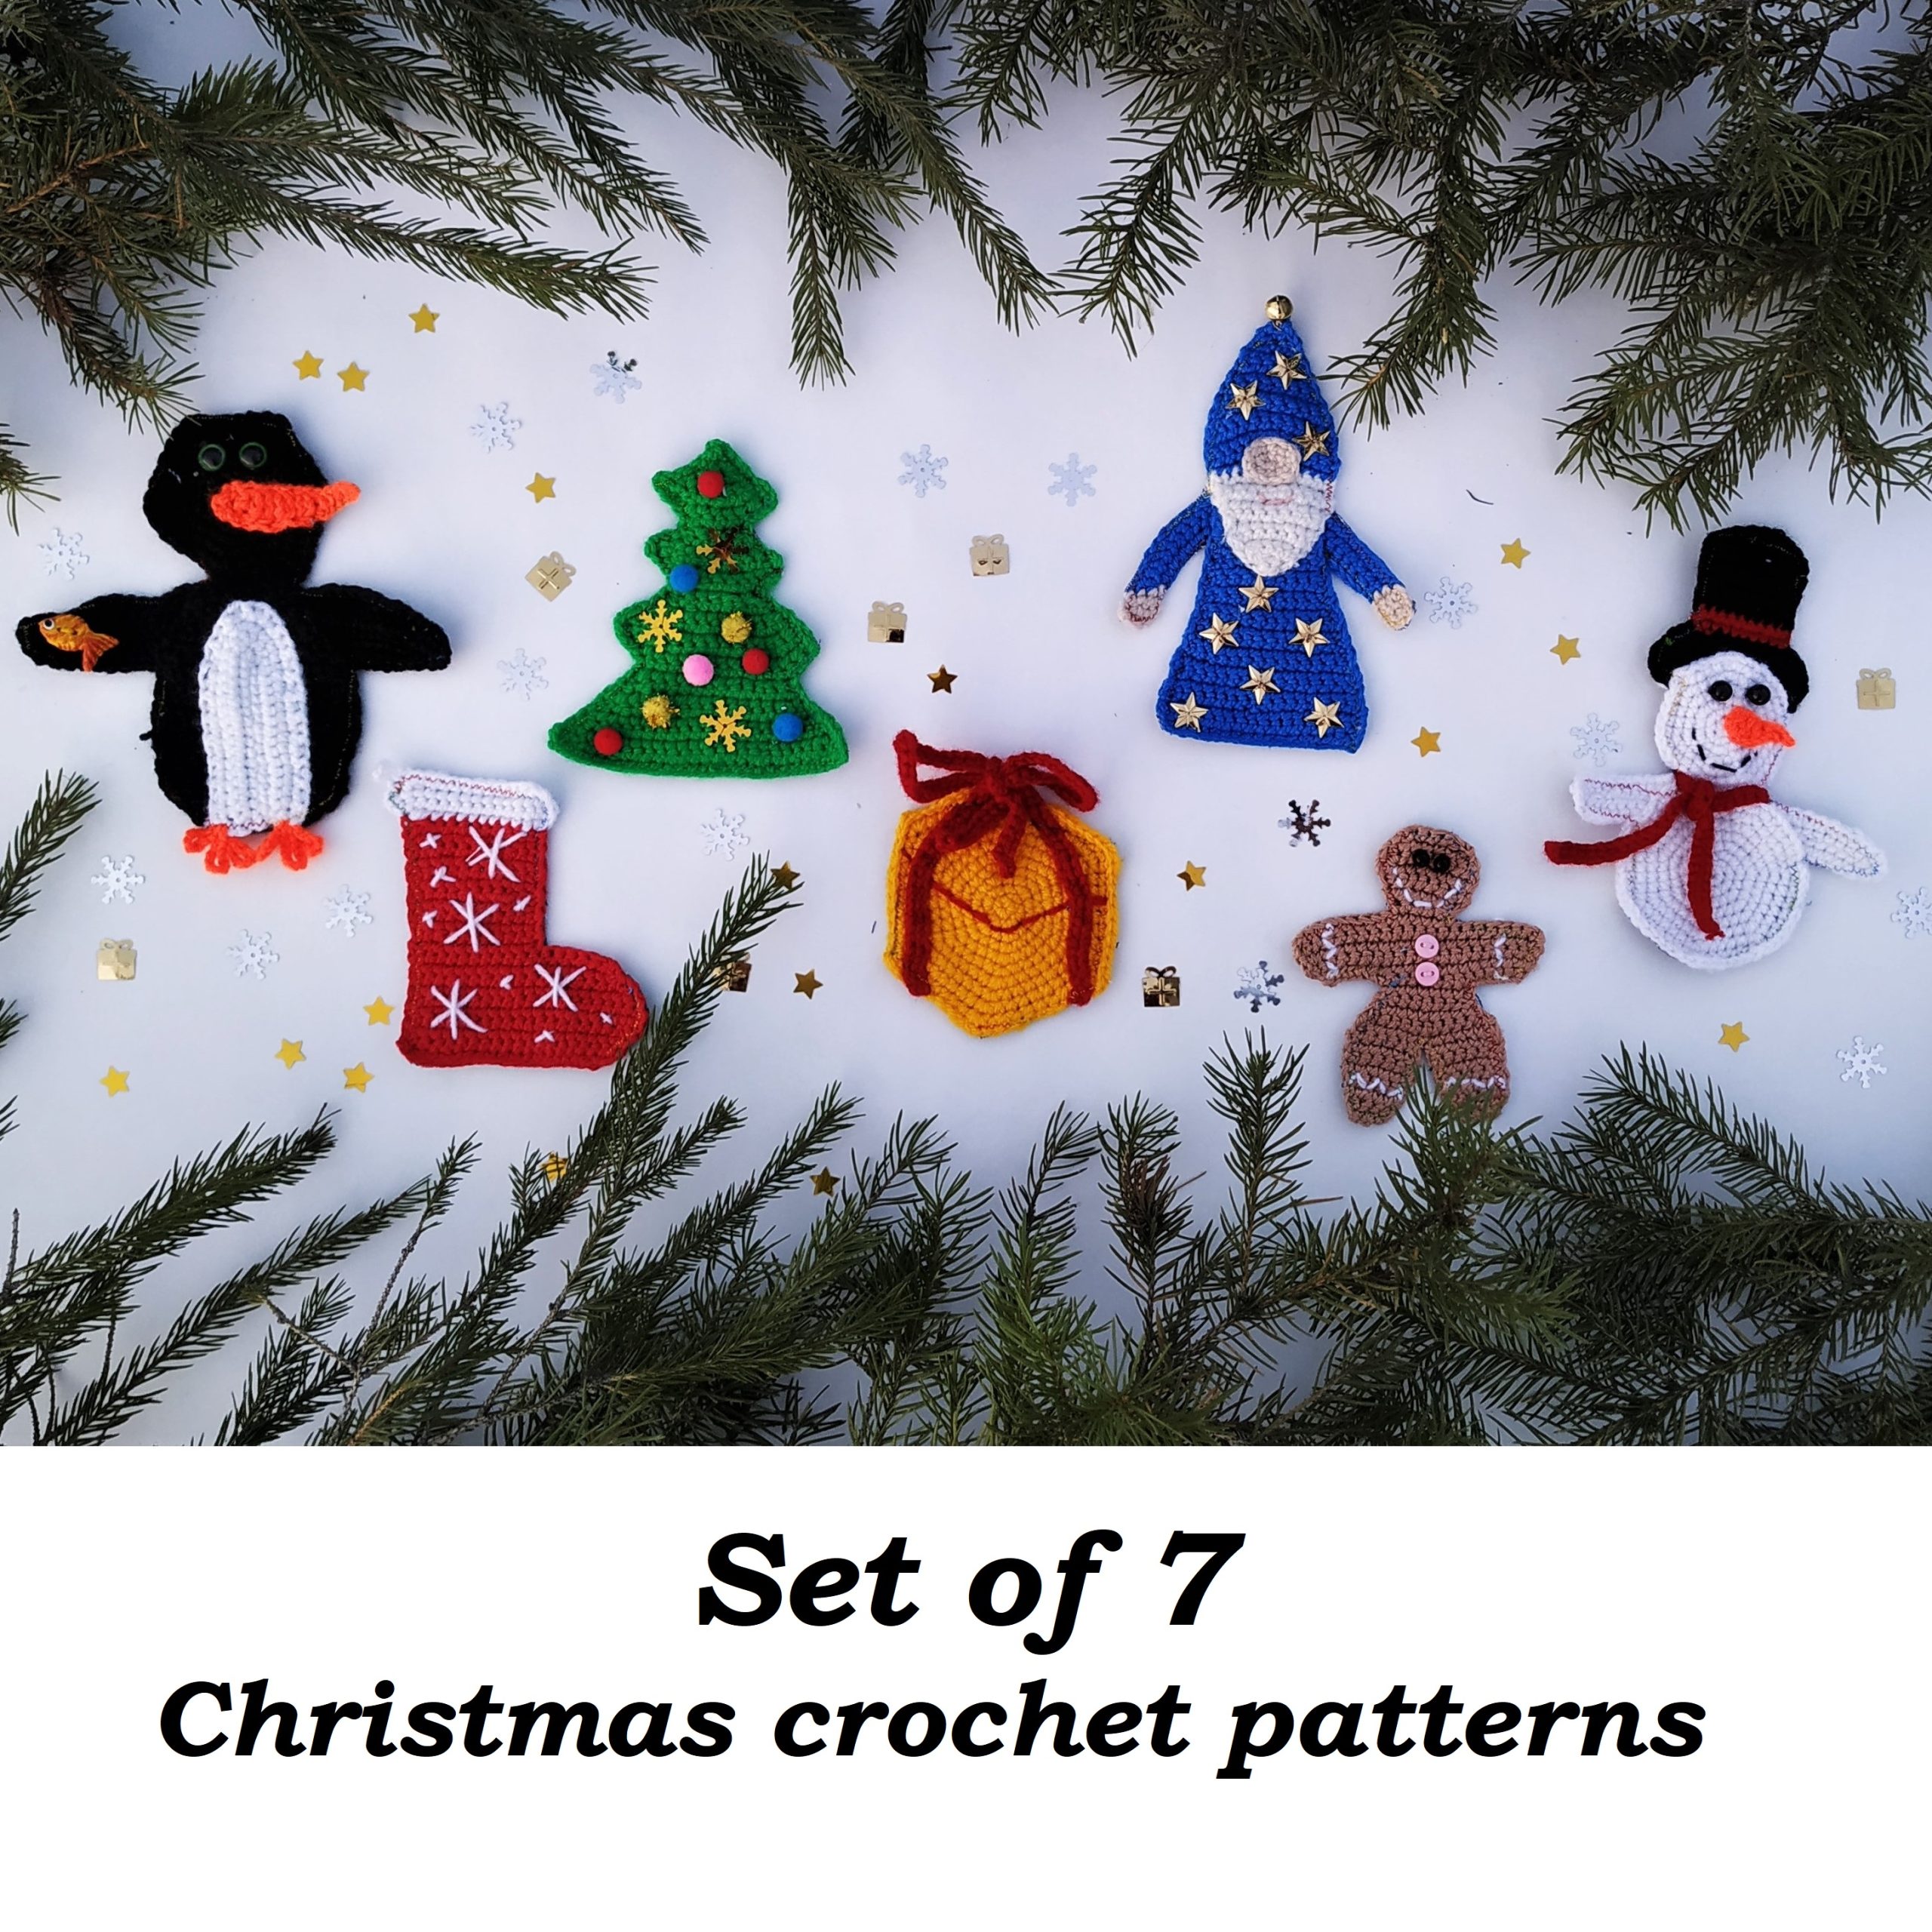 Crochet Christmas applique pattern, Christmas crochet applique pattern, Christmas crochet pattern